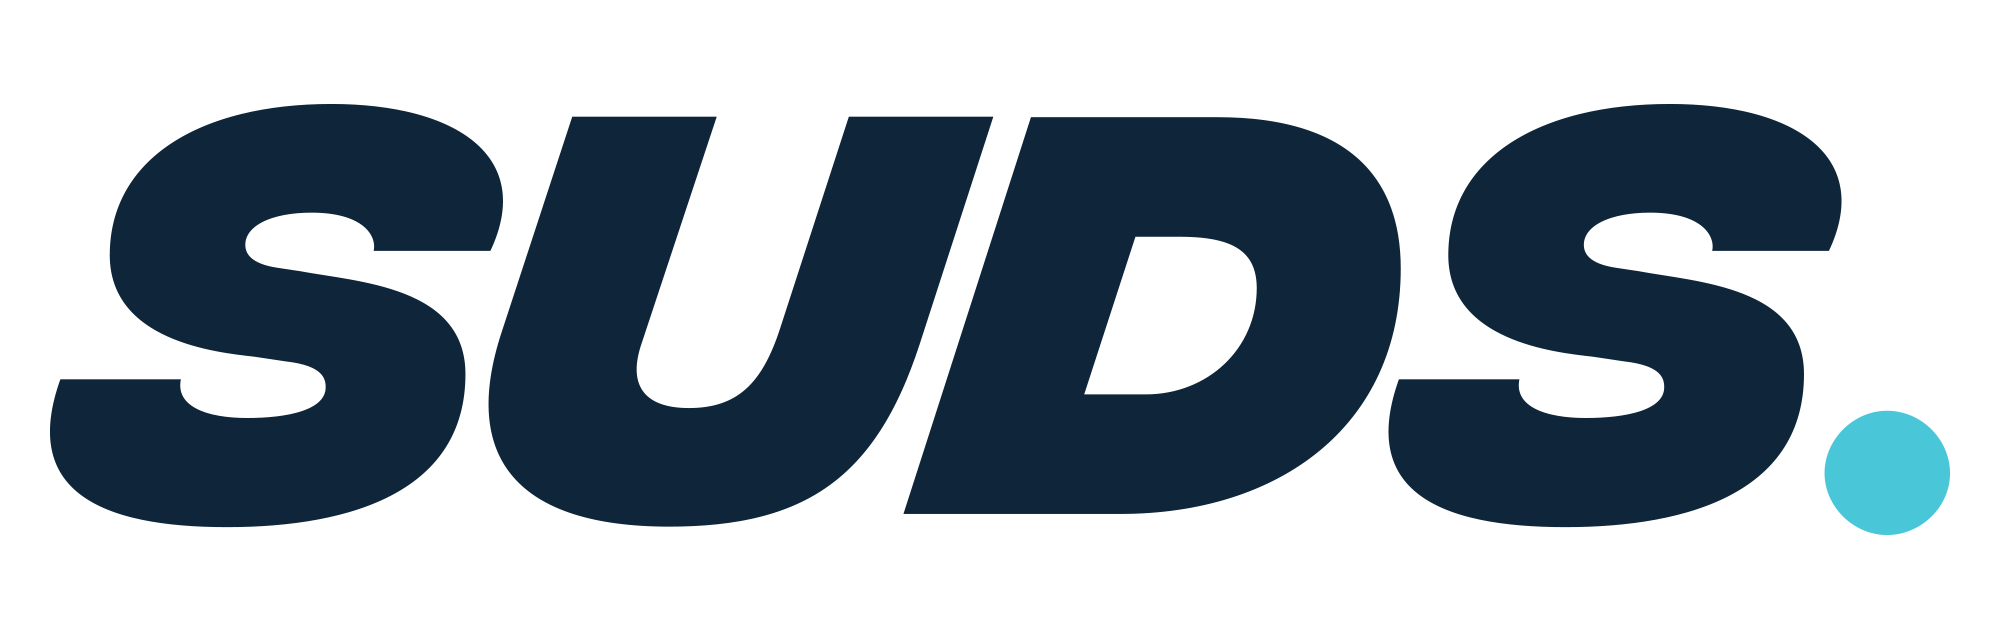 suds logo